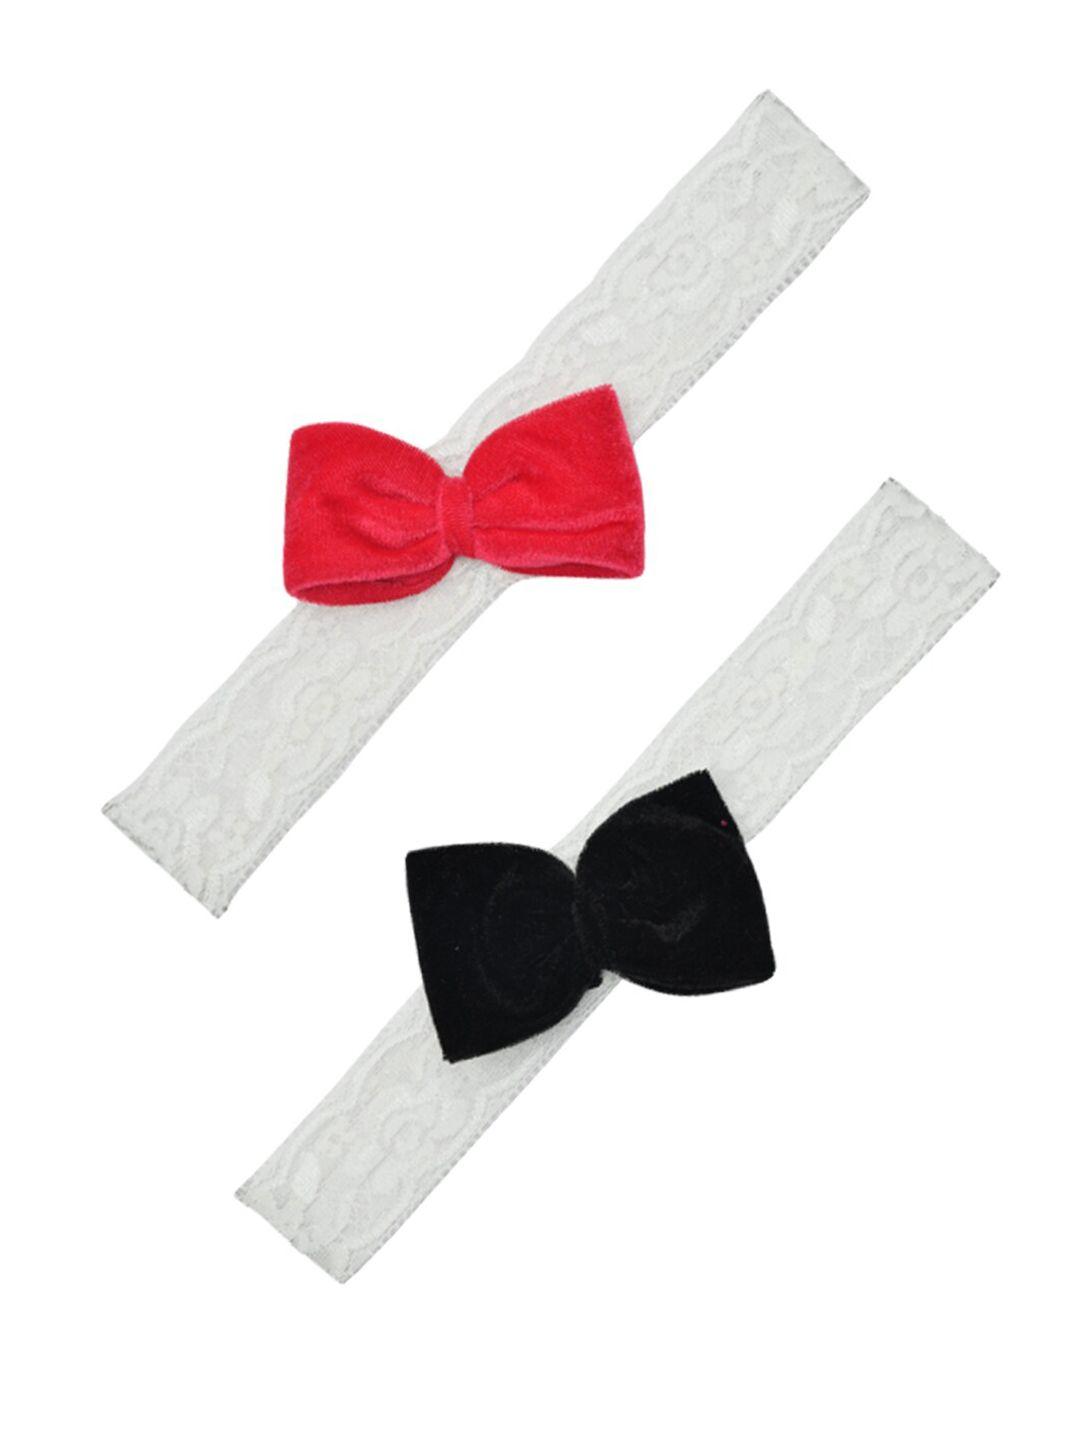 funkrafts girls white & black set of 2 lace hairbands with velvet bow